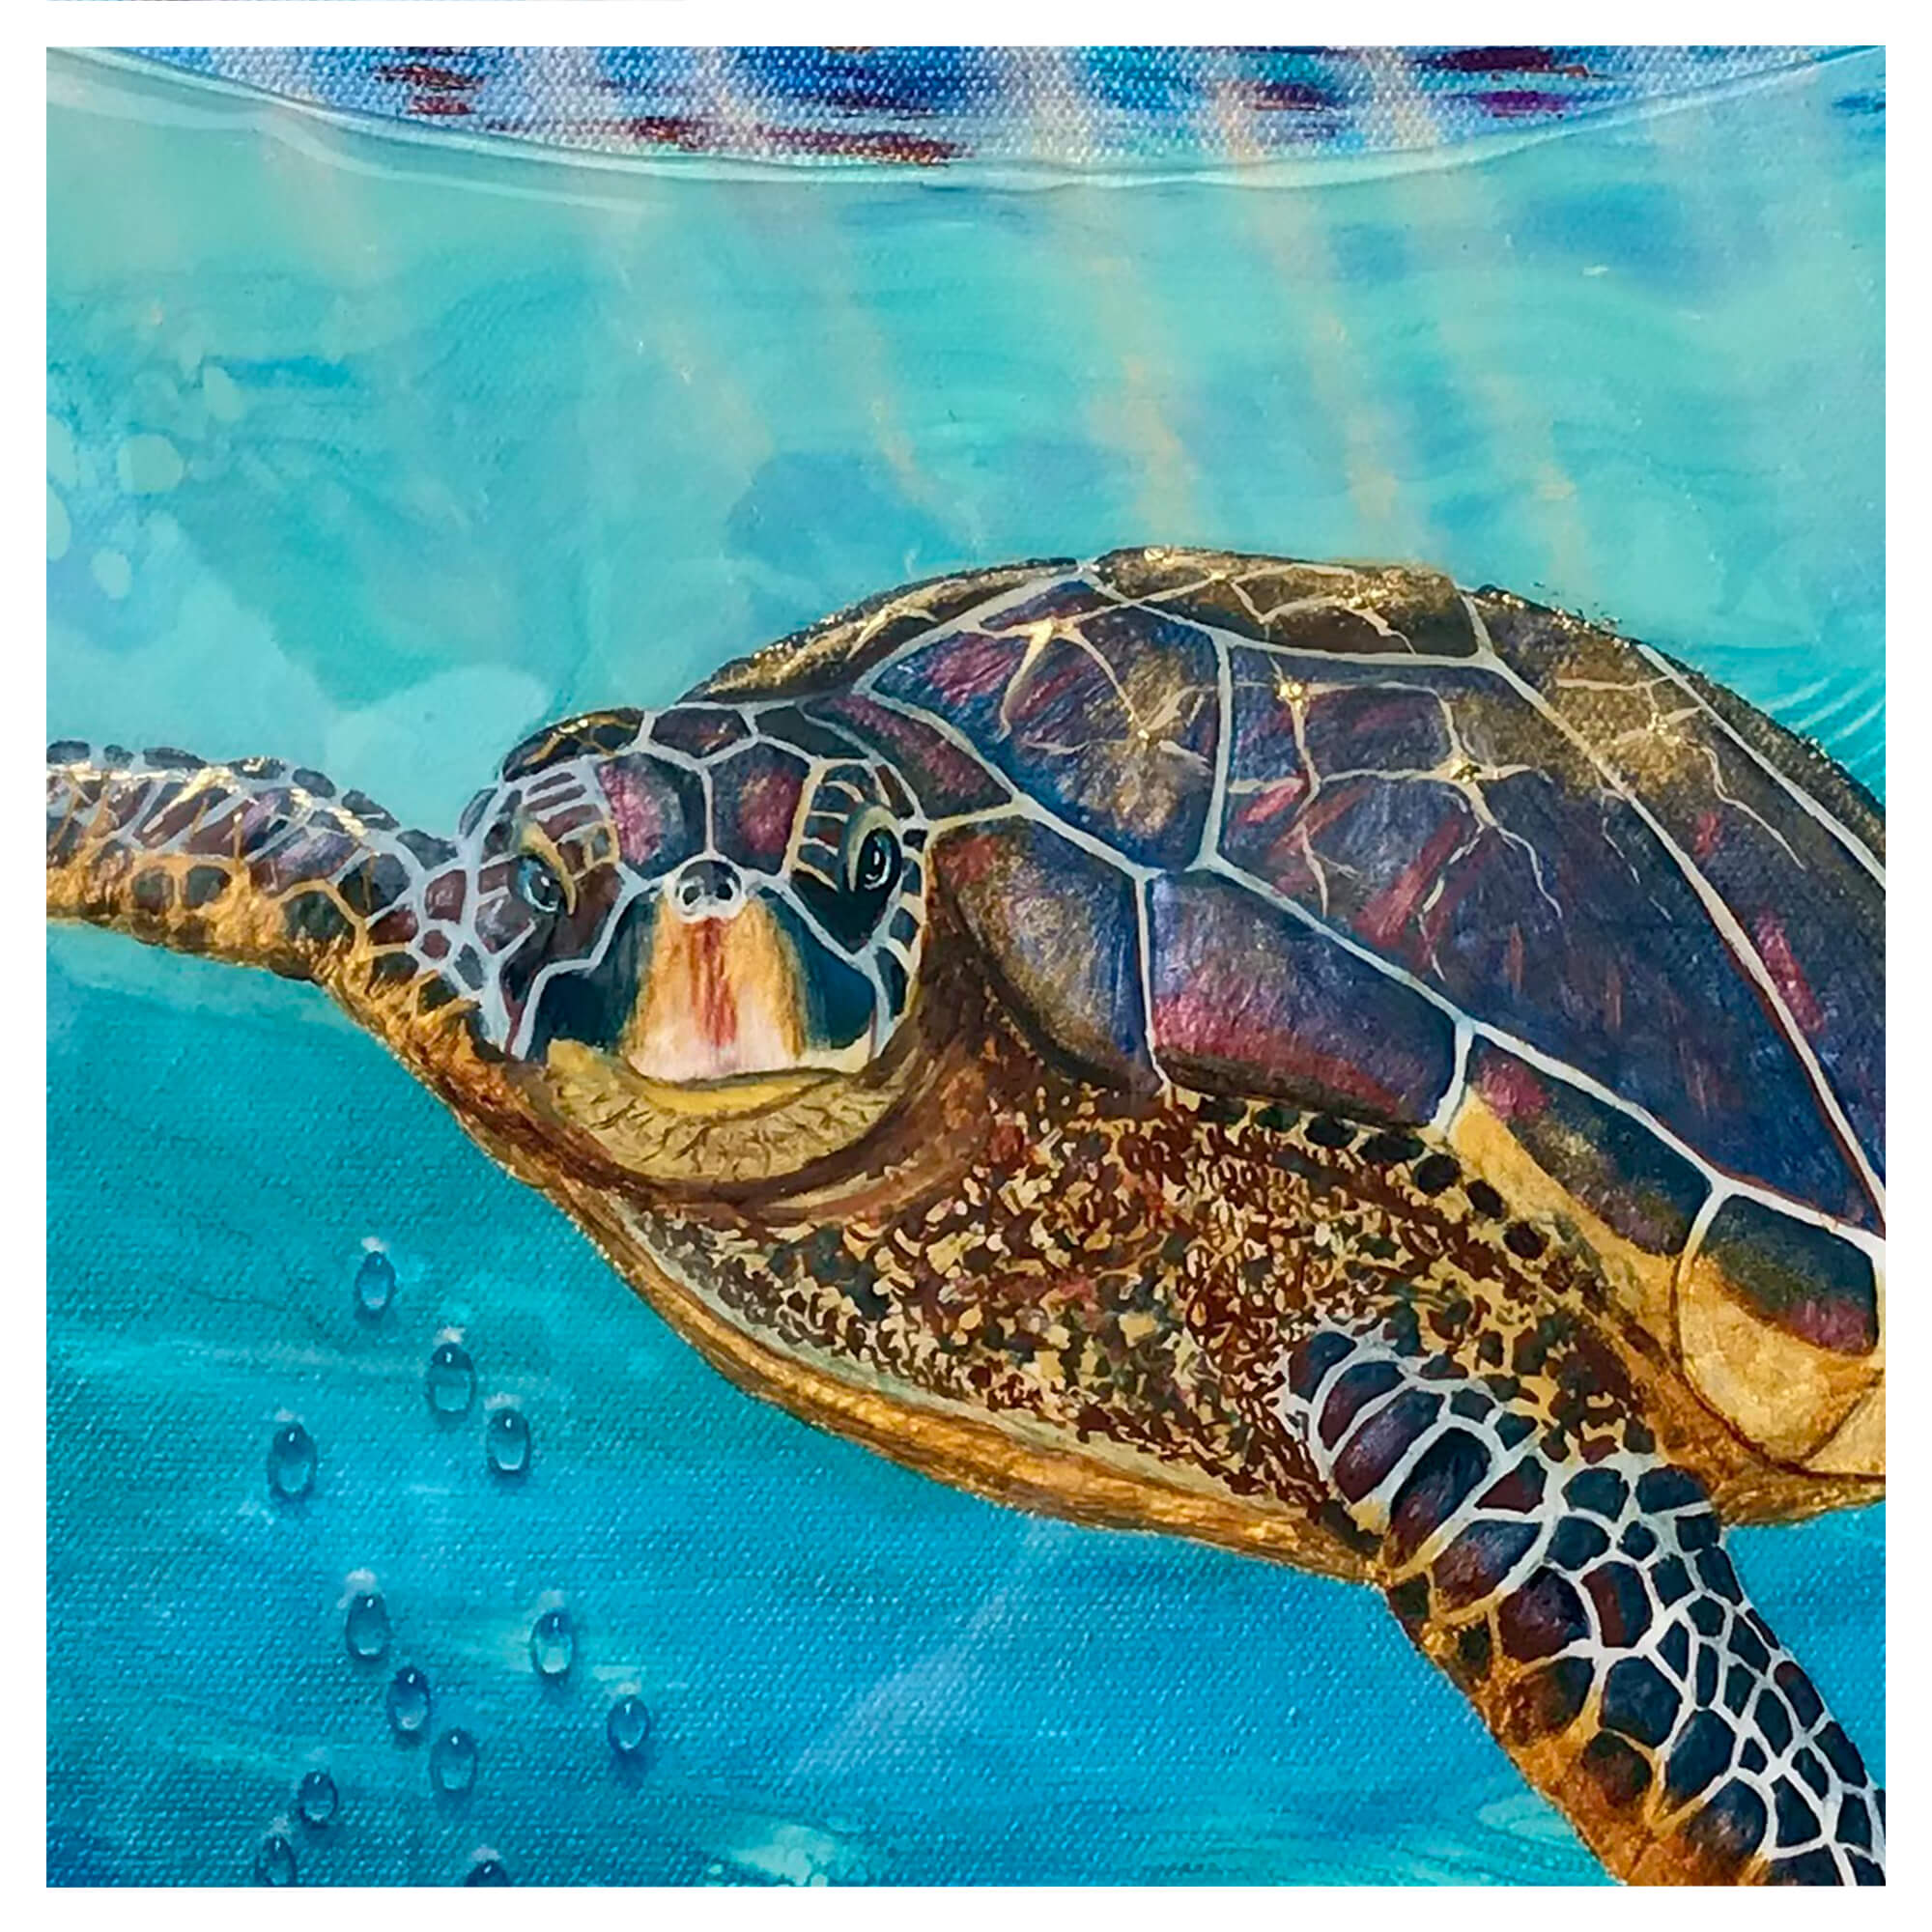 An illustration of a turtle by hawaii artist Galina Lintz 